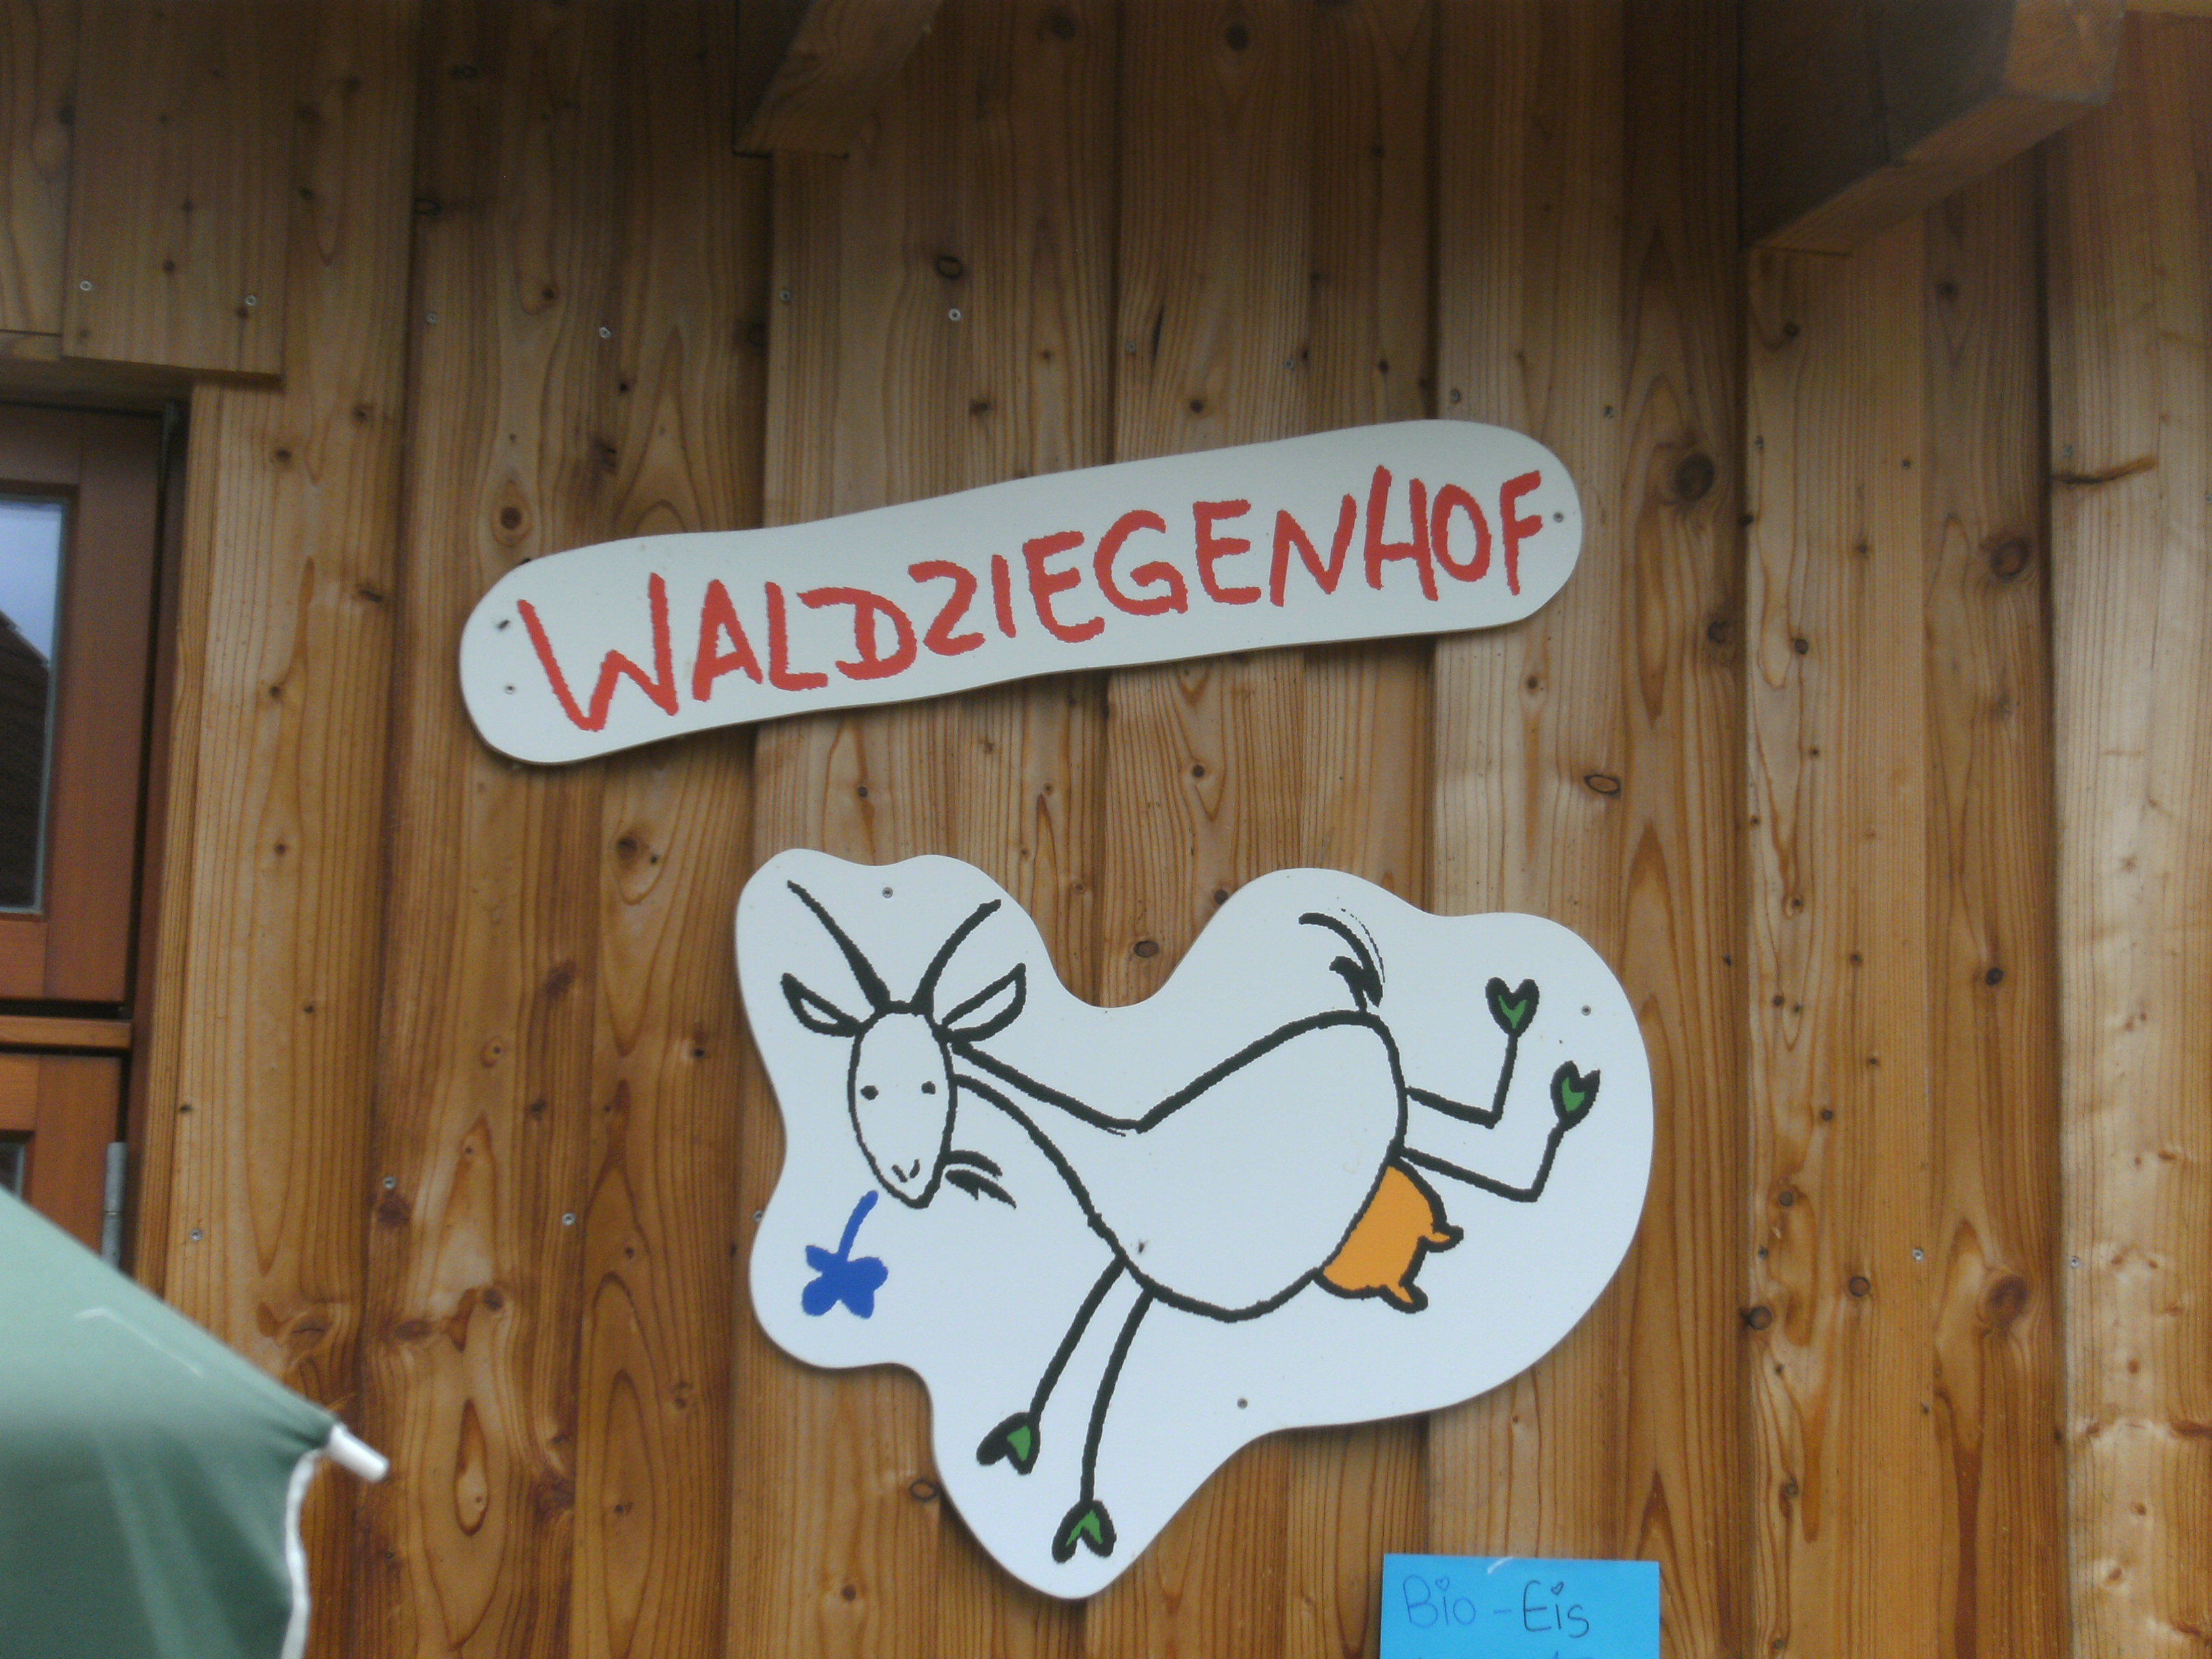 Waldziegenhof